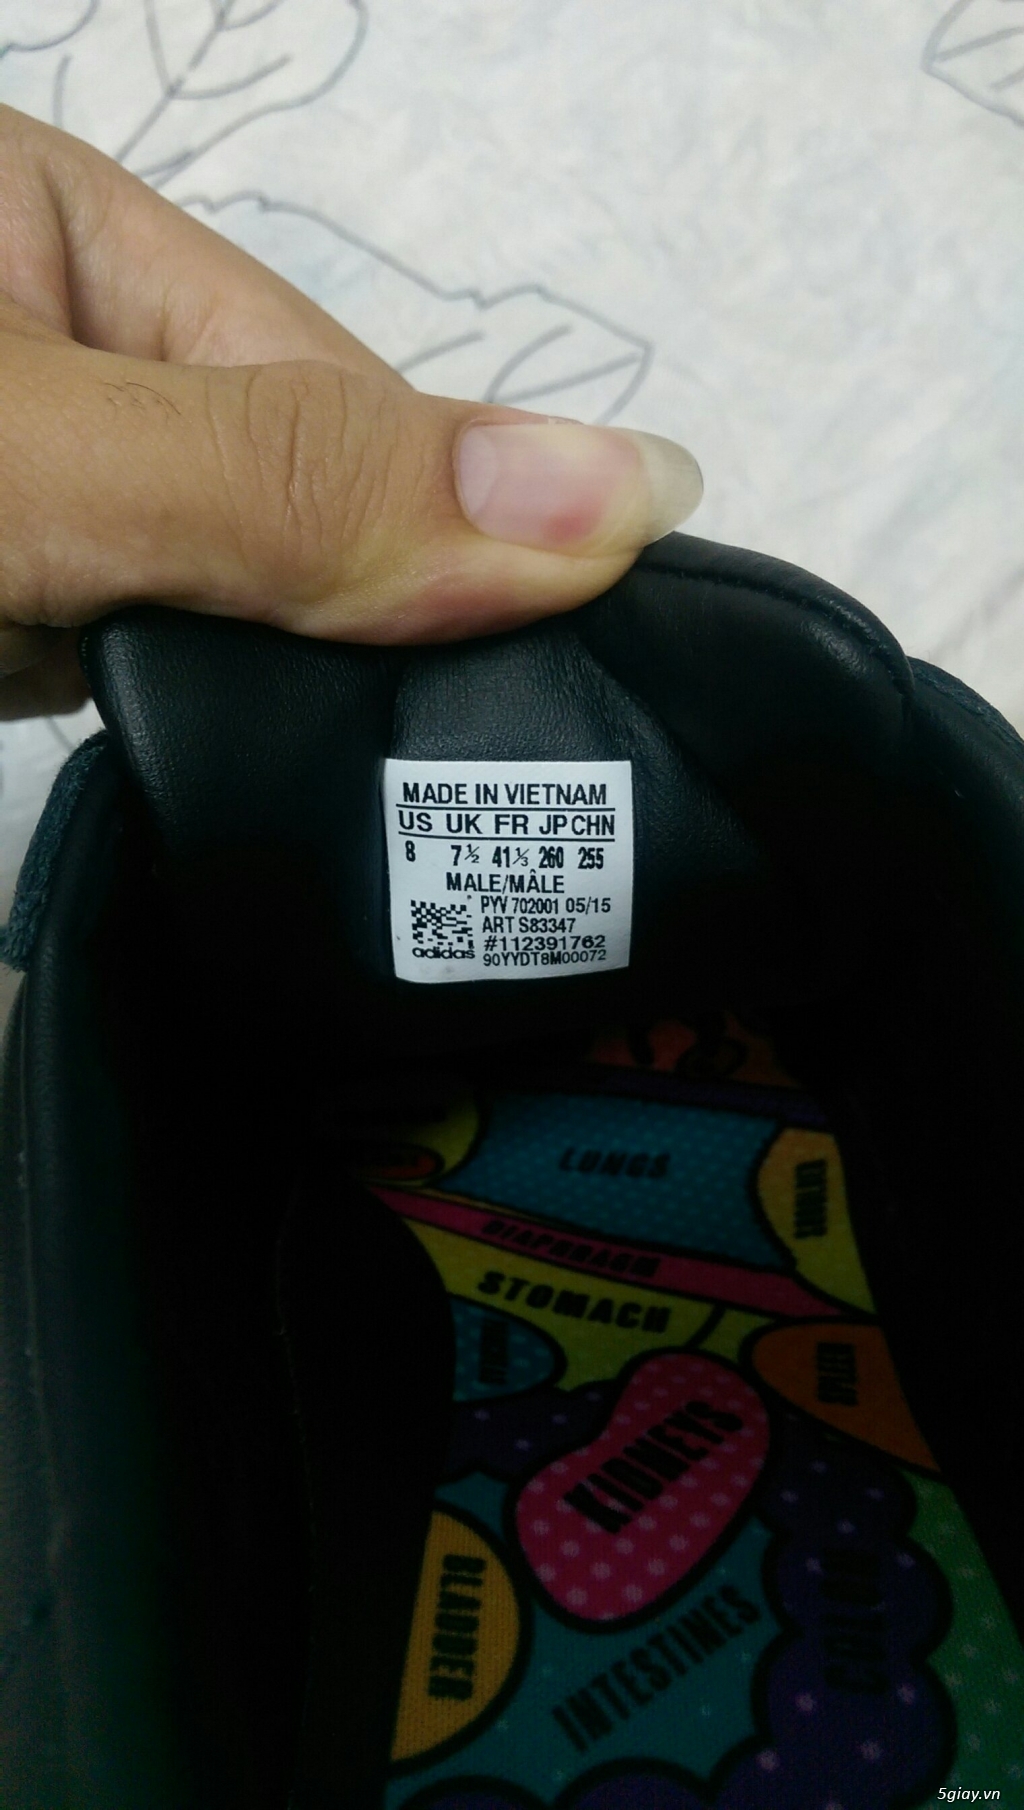 Bán giày Adidas Todd James Supershell Superstar mới 100% size US 8 black - 4